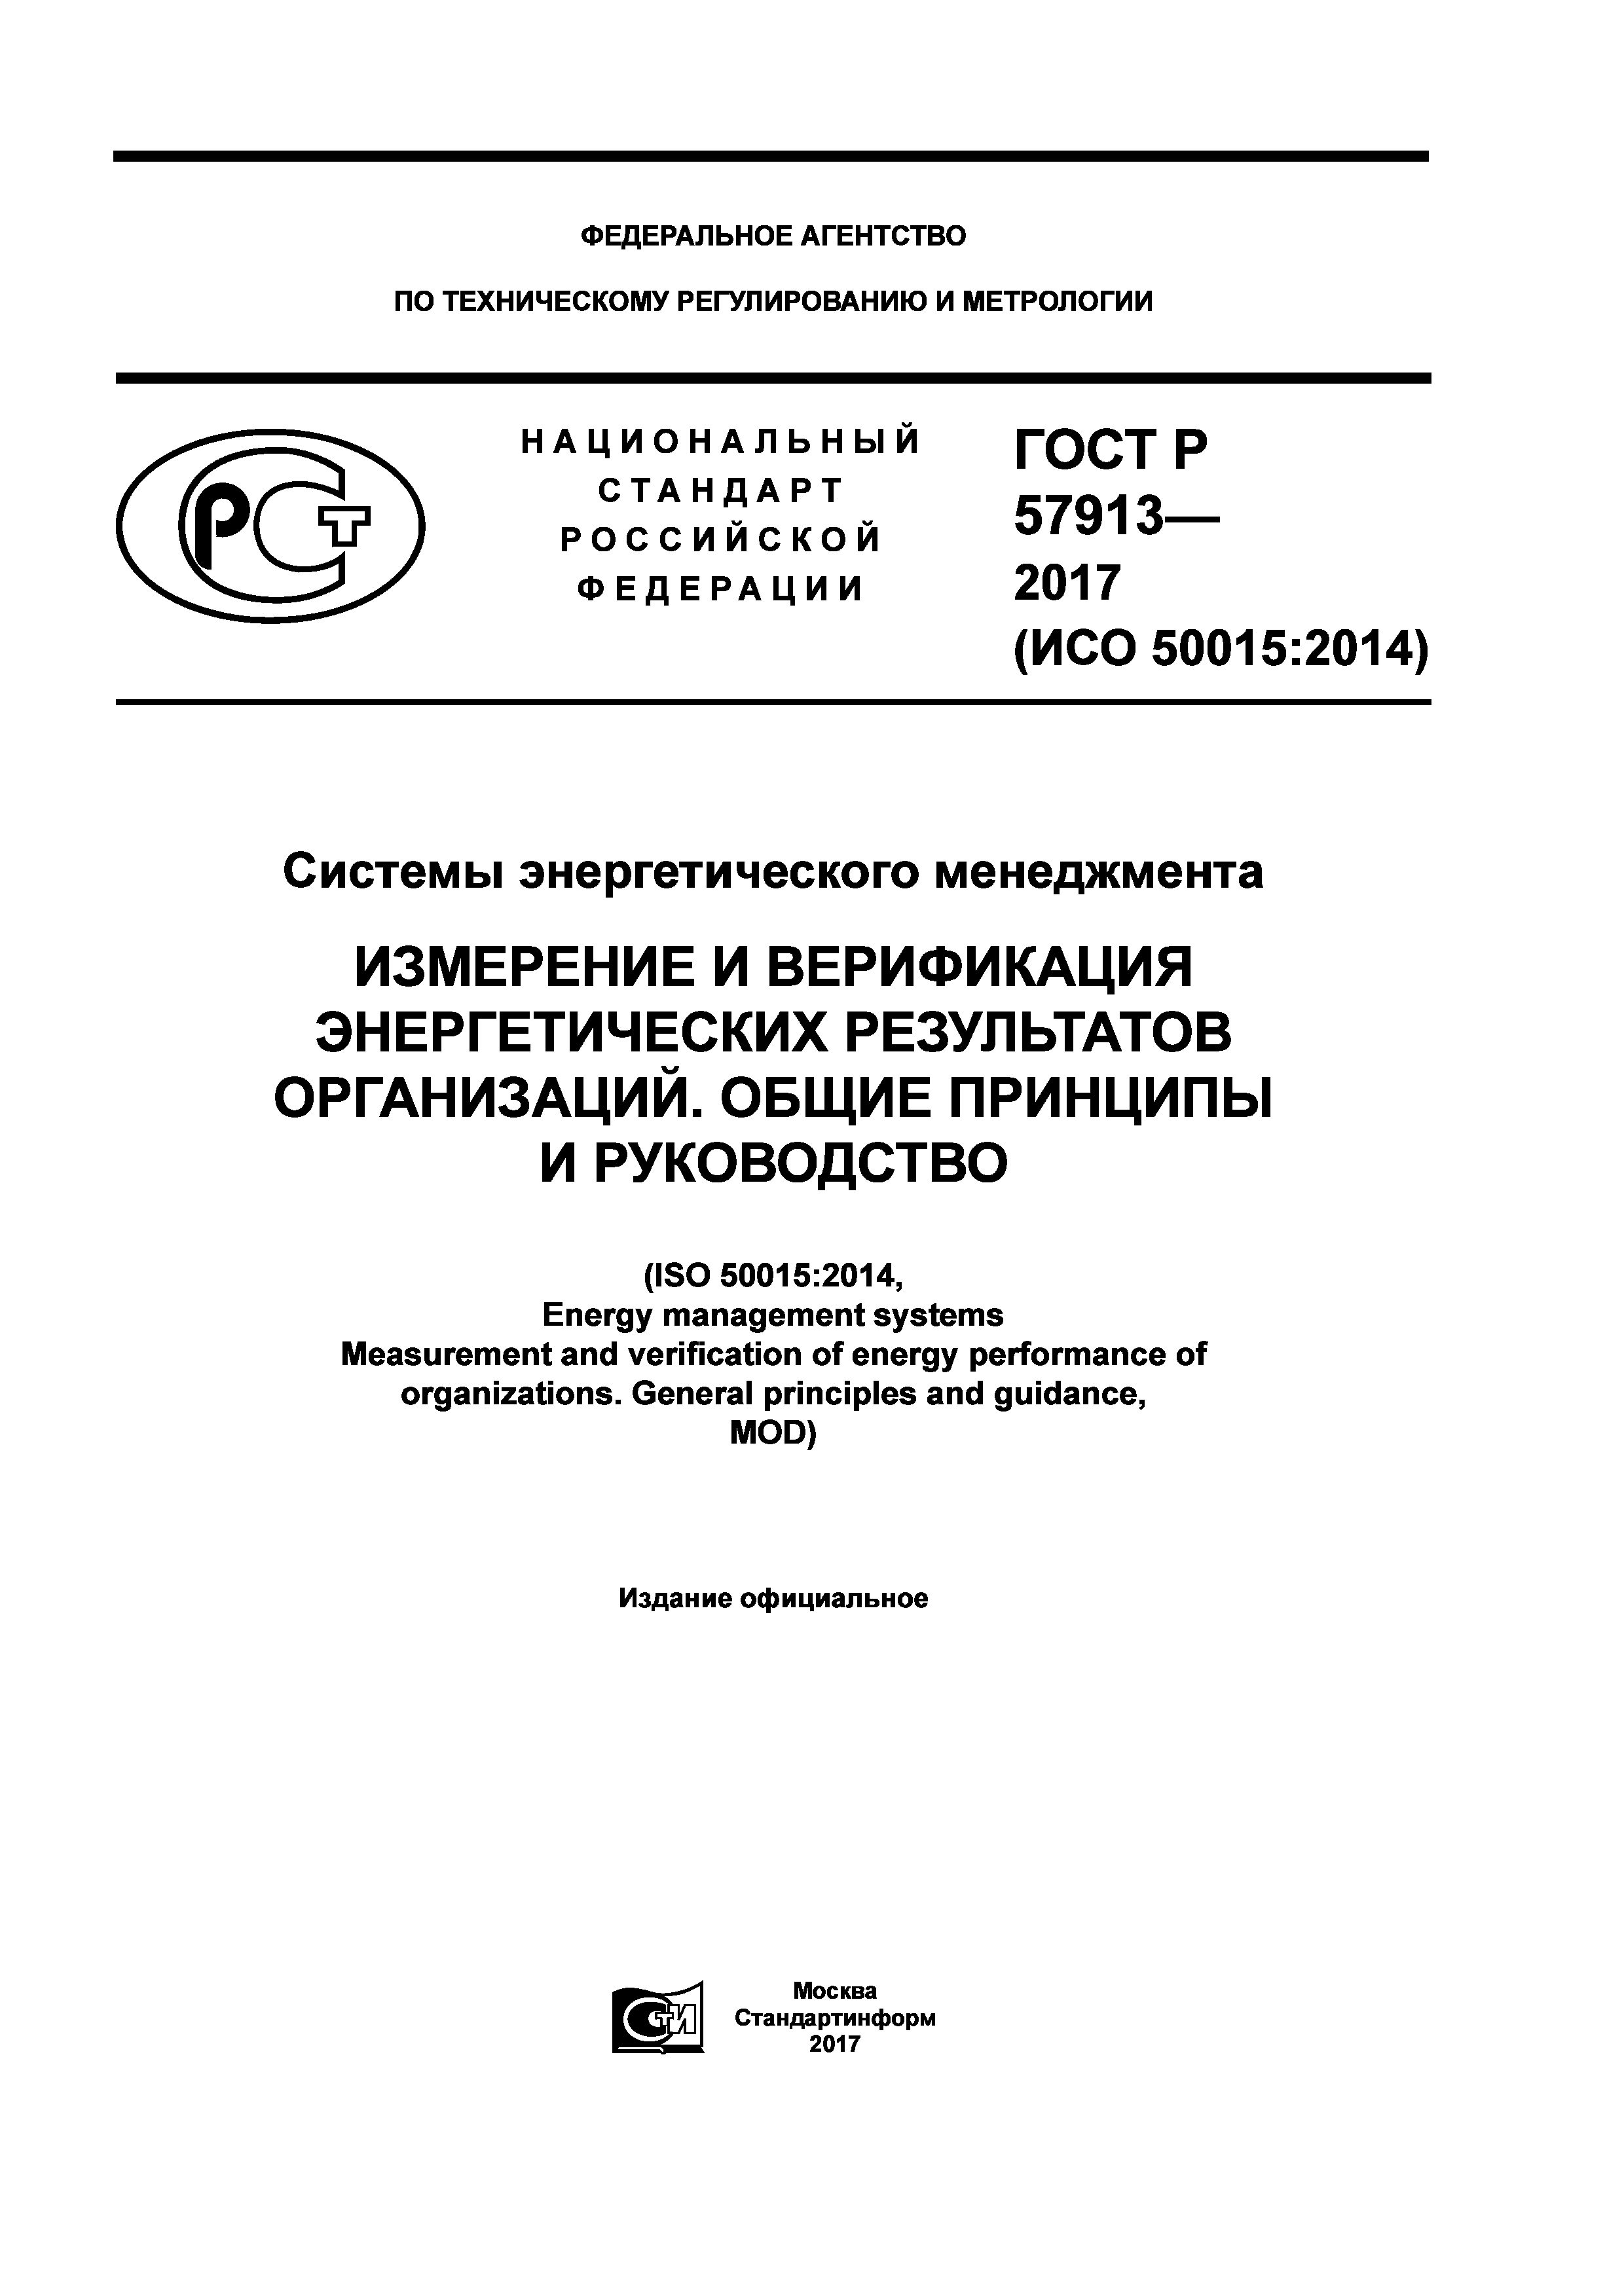 ГОСТ Р 57913-2017